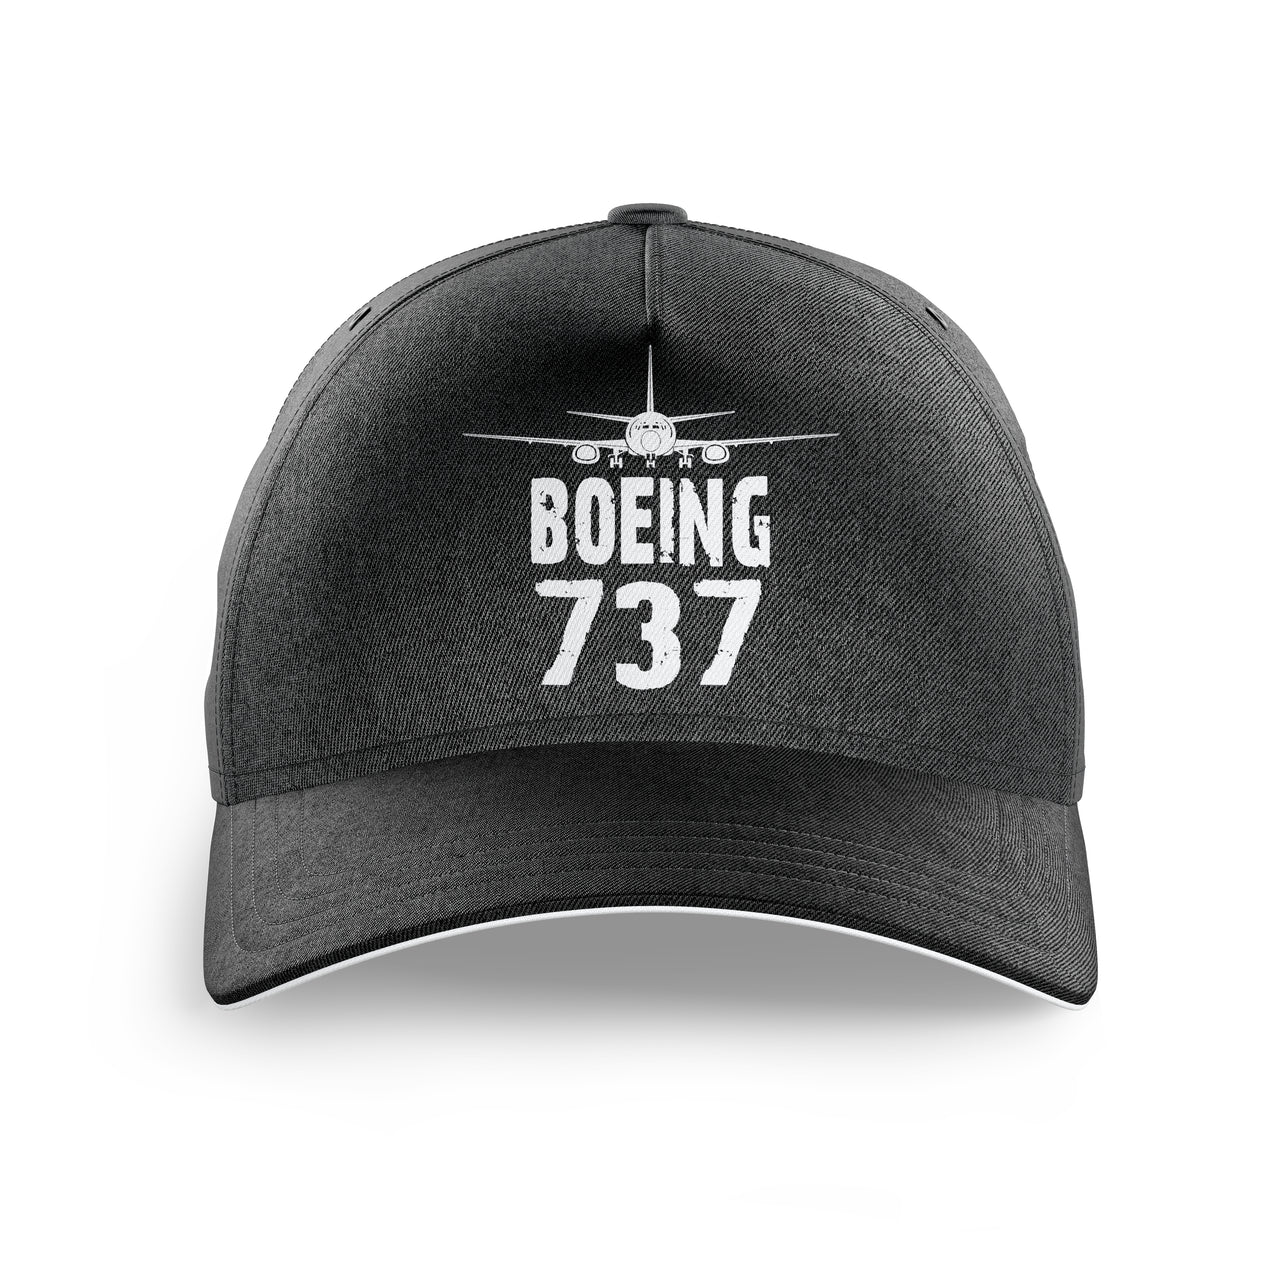 Boeing 737 & Plane Printed Hats